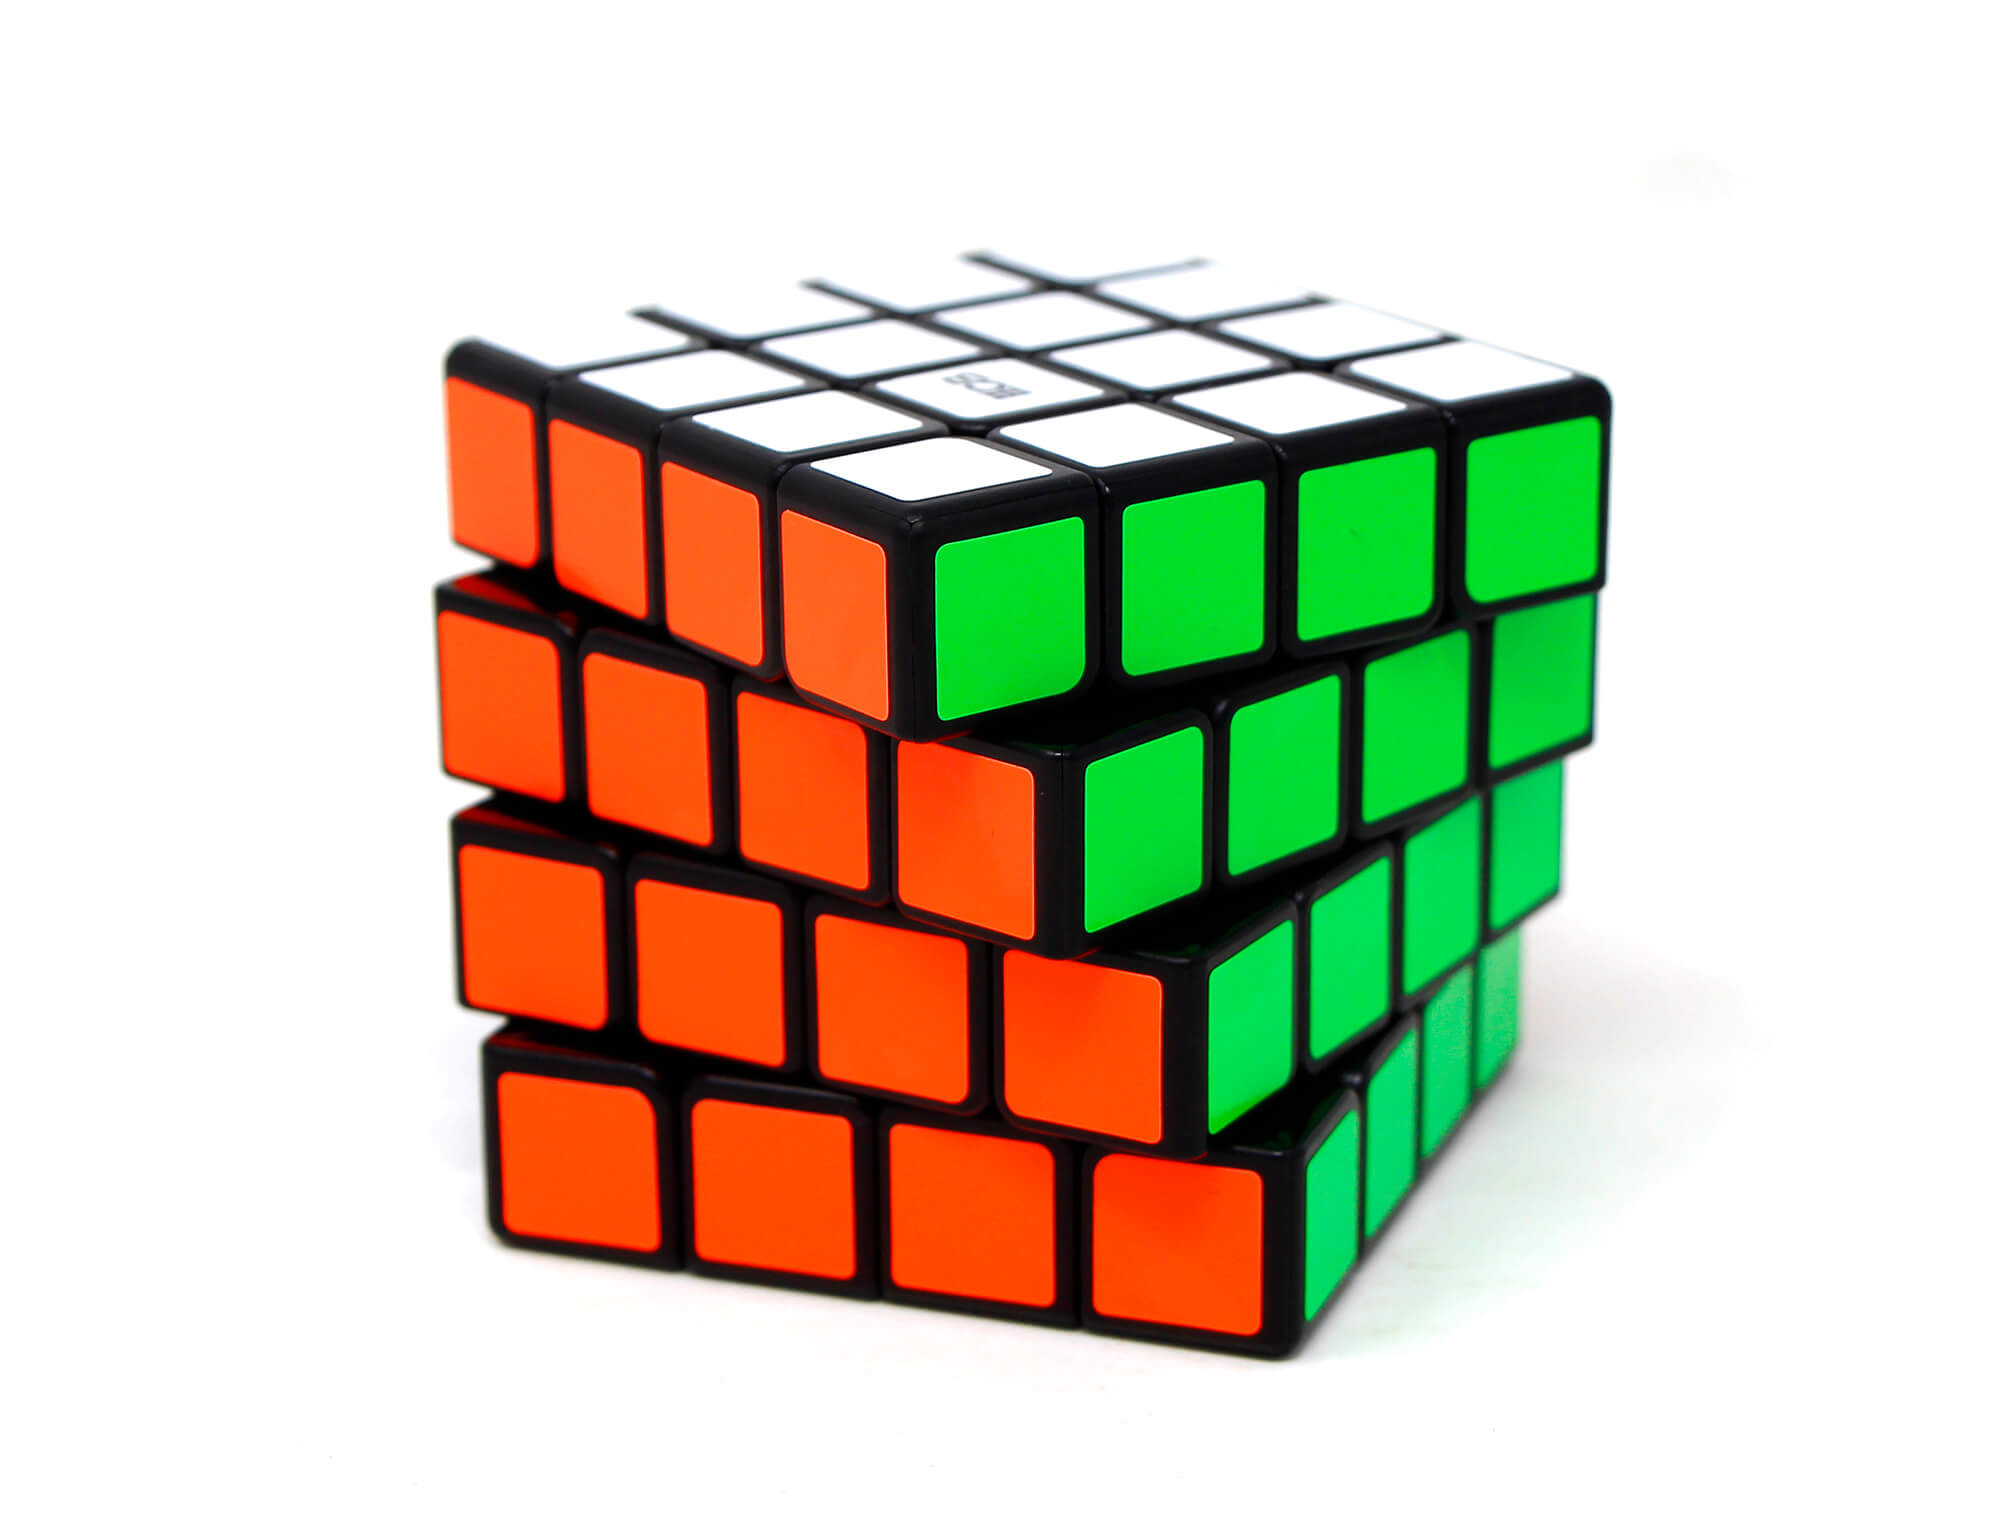 Cubo Mágico Profissional - Pro 3 - Cuber